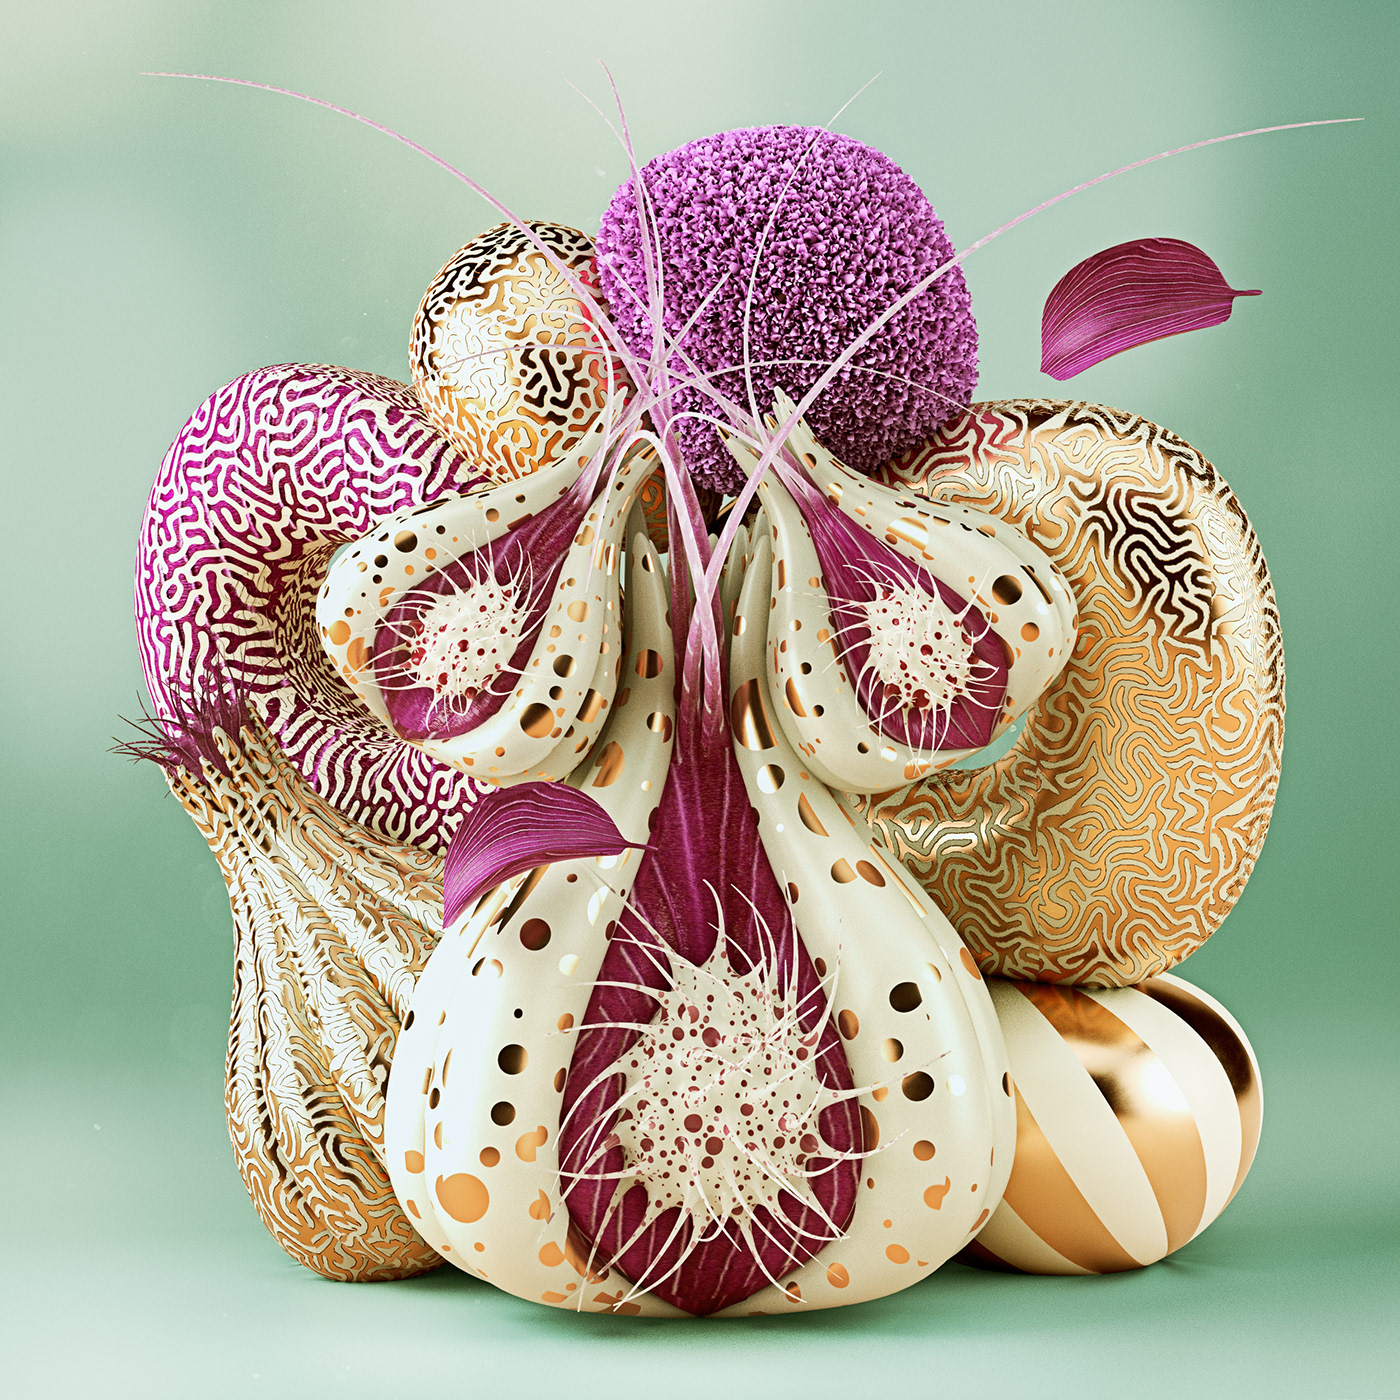 Flowers organic forms 3D ILLUSTRATION 